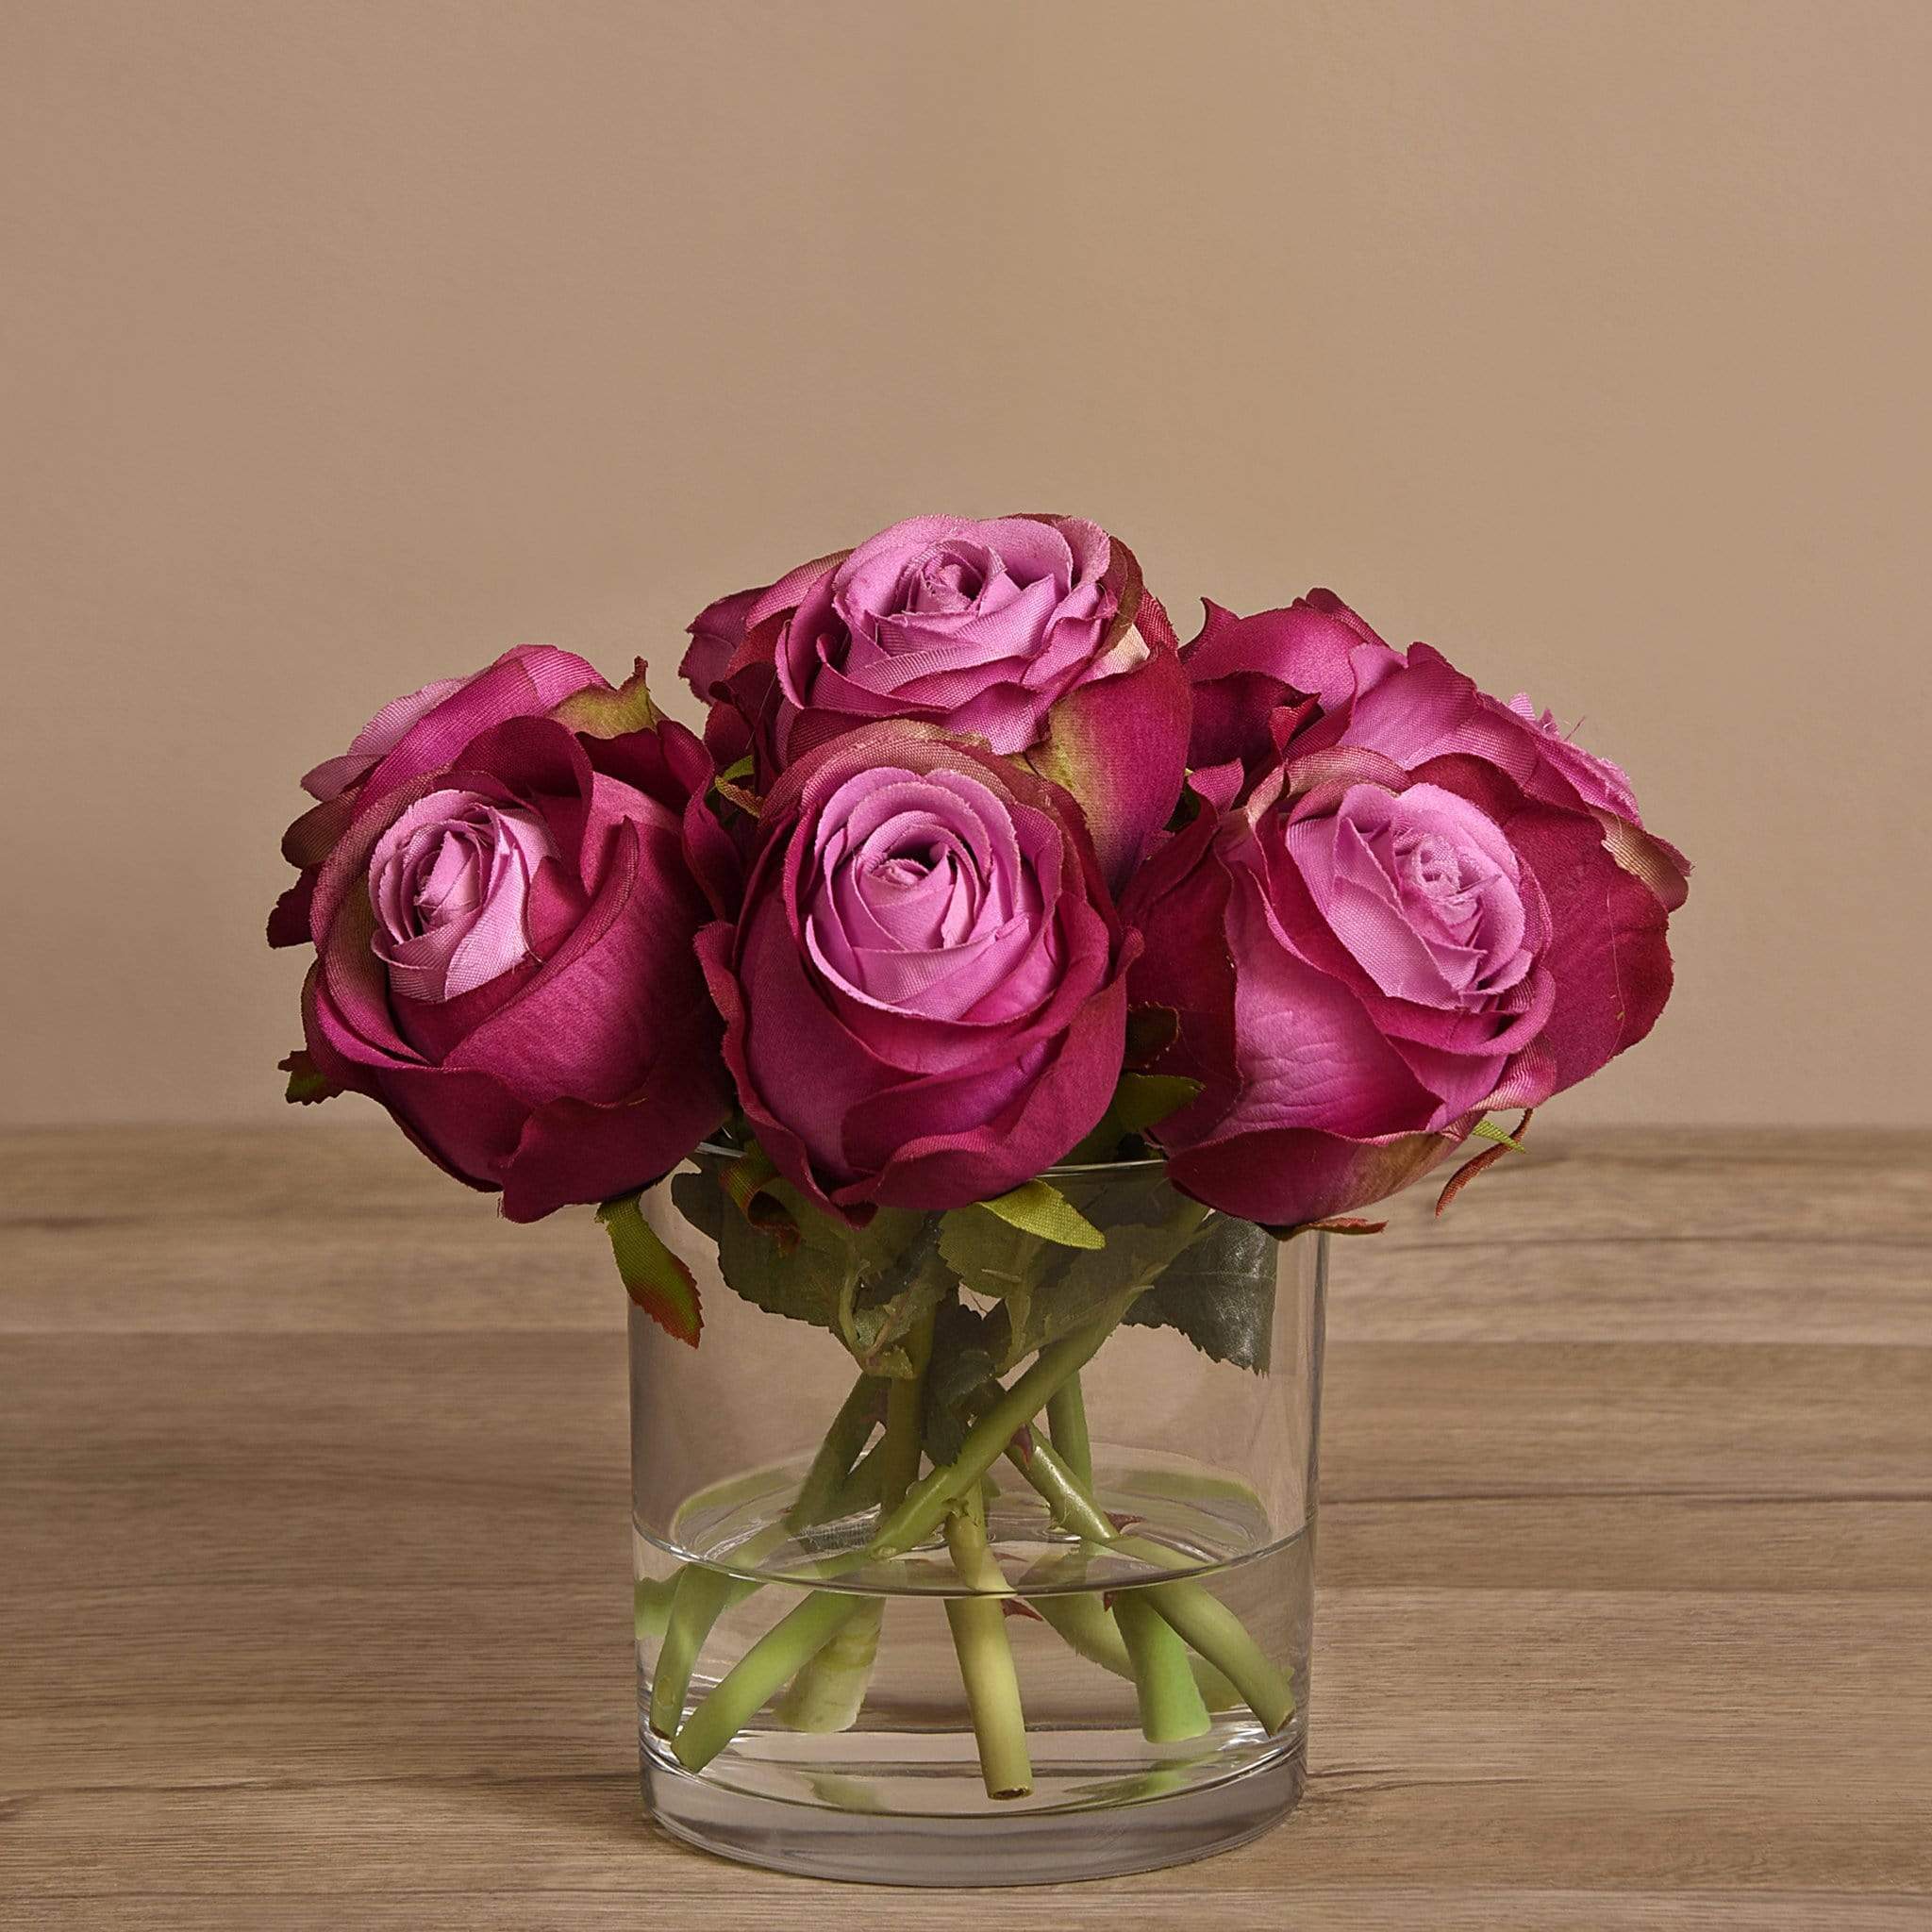 Artificial Rose Arrangement in Glass Vase - Bloomr